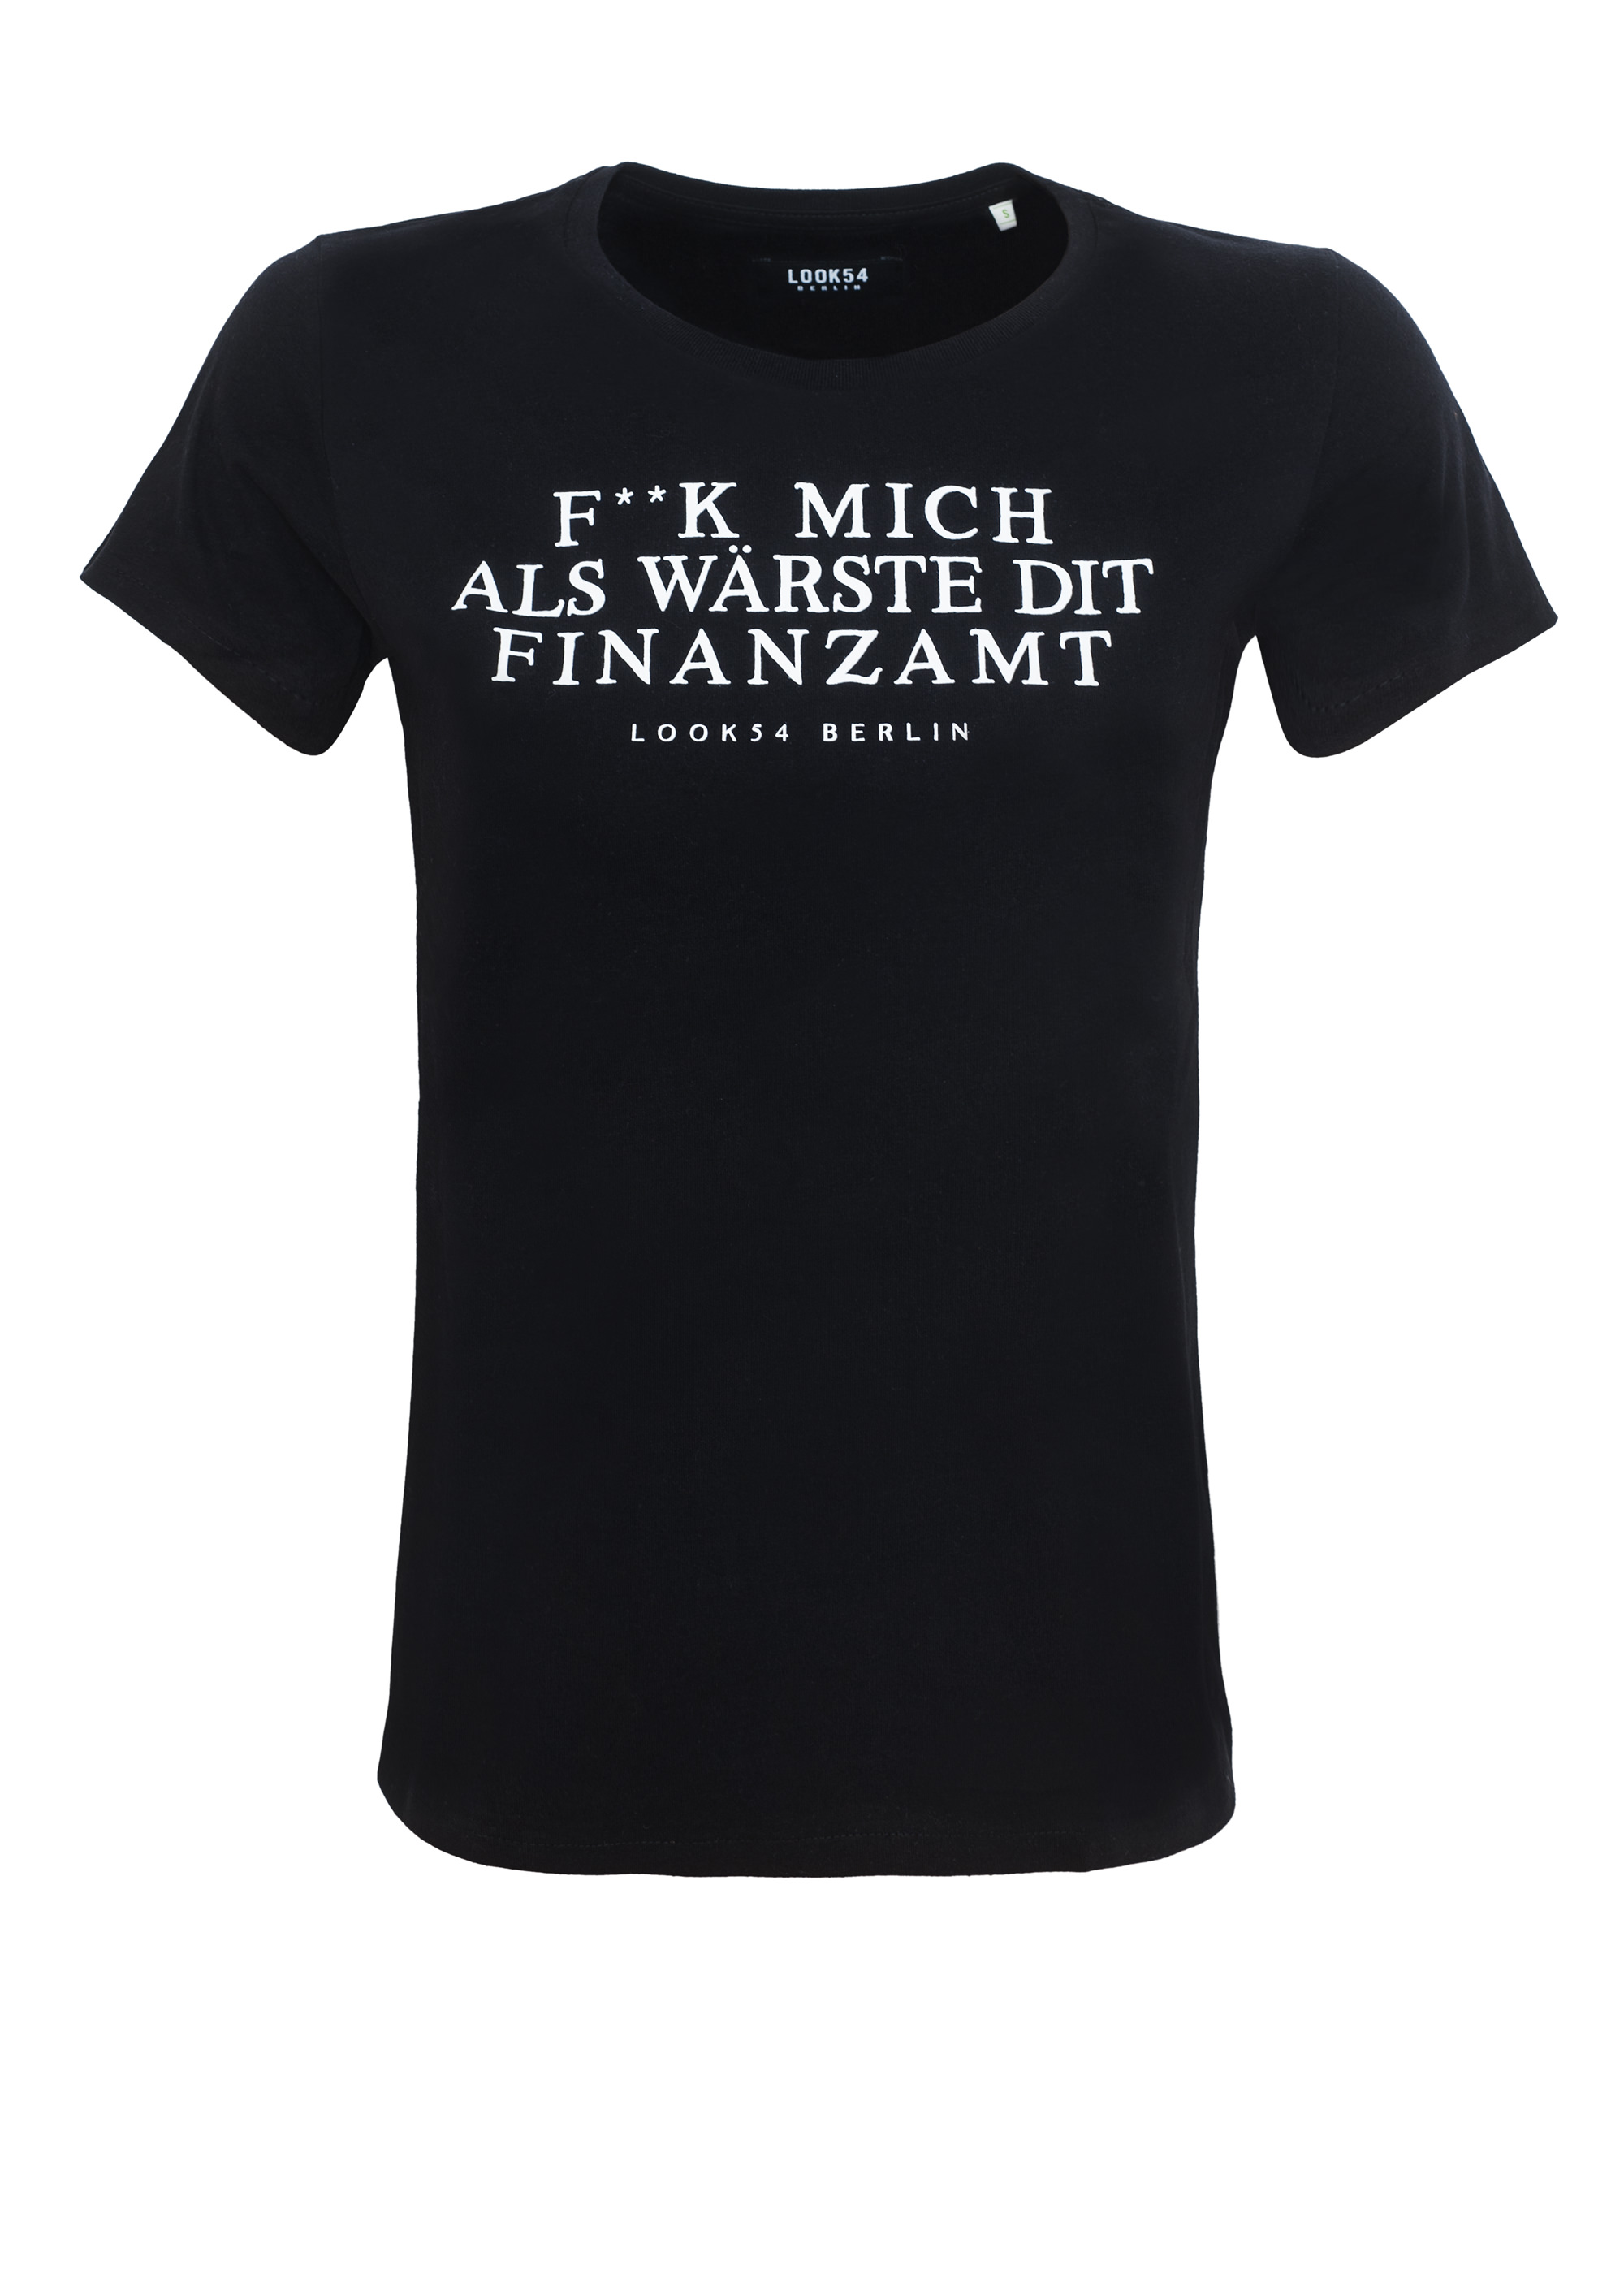 F**k mich Finanzamt - Shirt